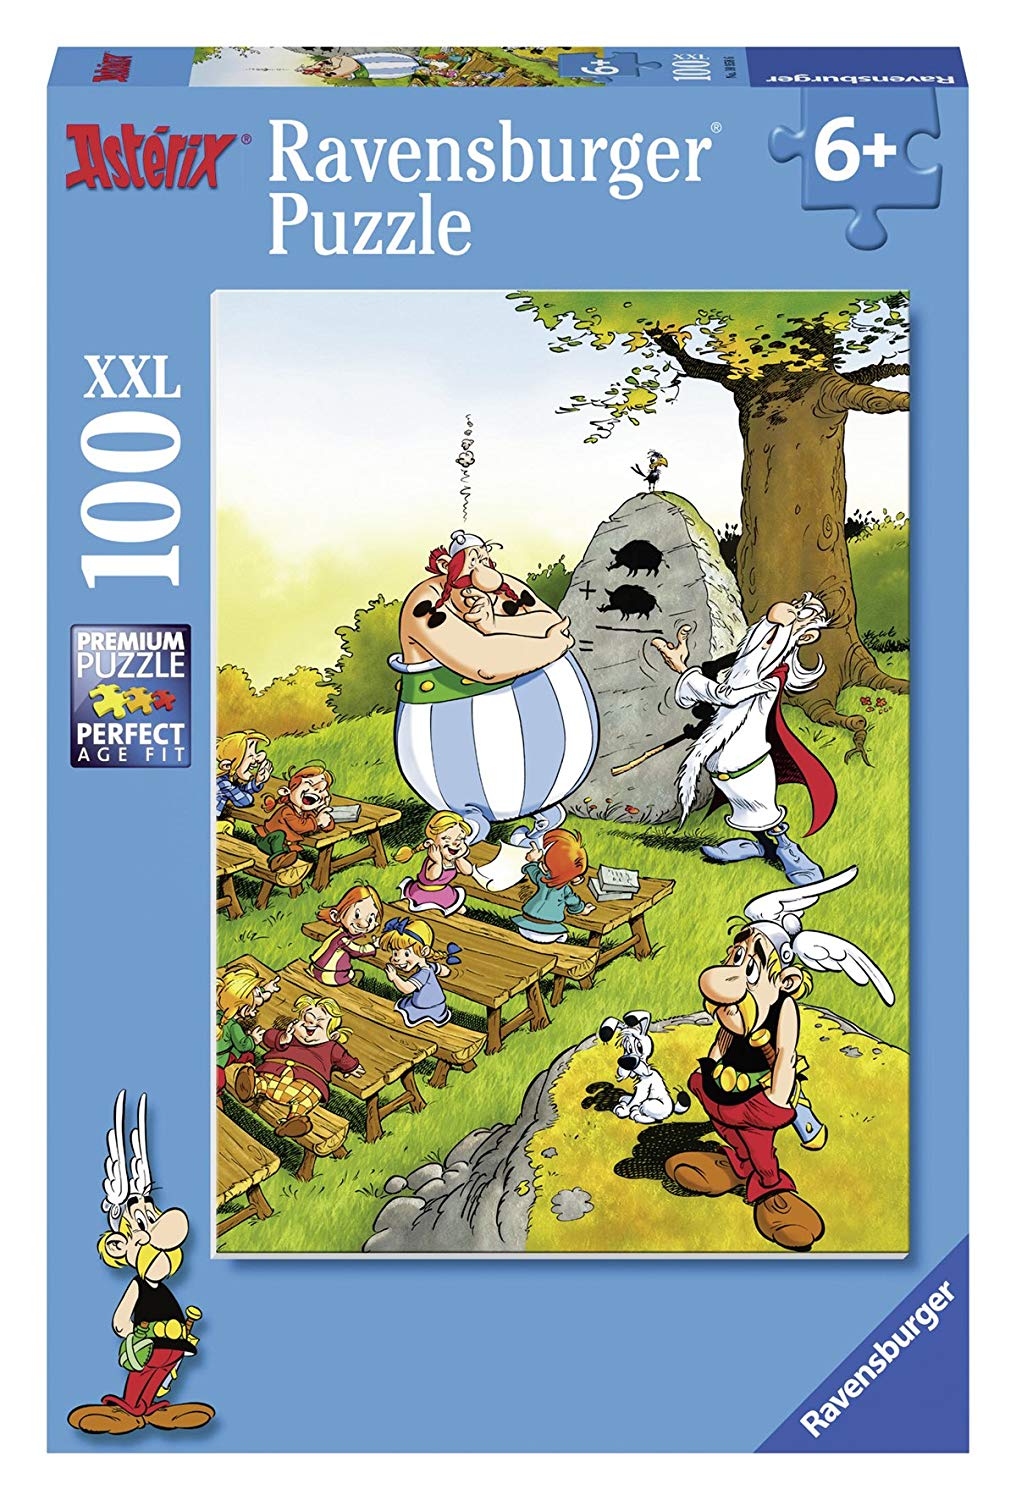 Puzzle Ravensburger - Asterix y Obelix, el alumno. 100 piezas-Ravensburger-Doctor Panush